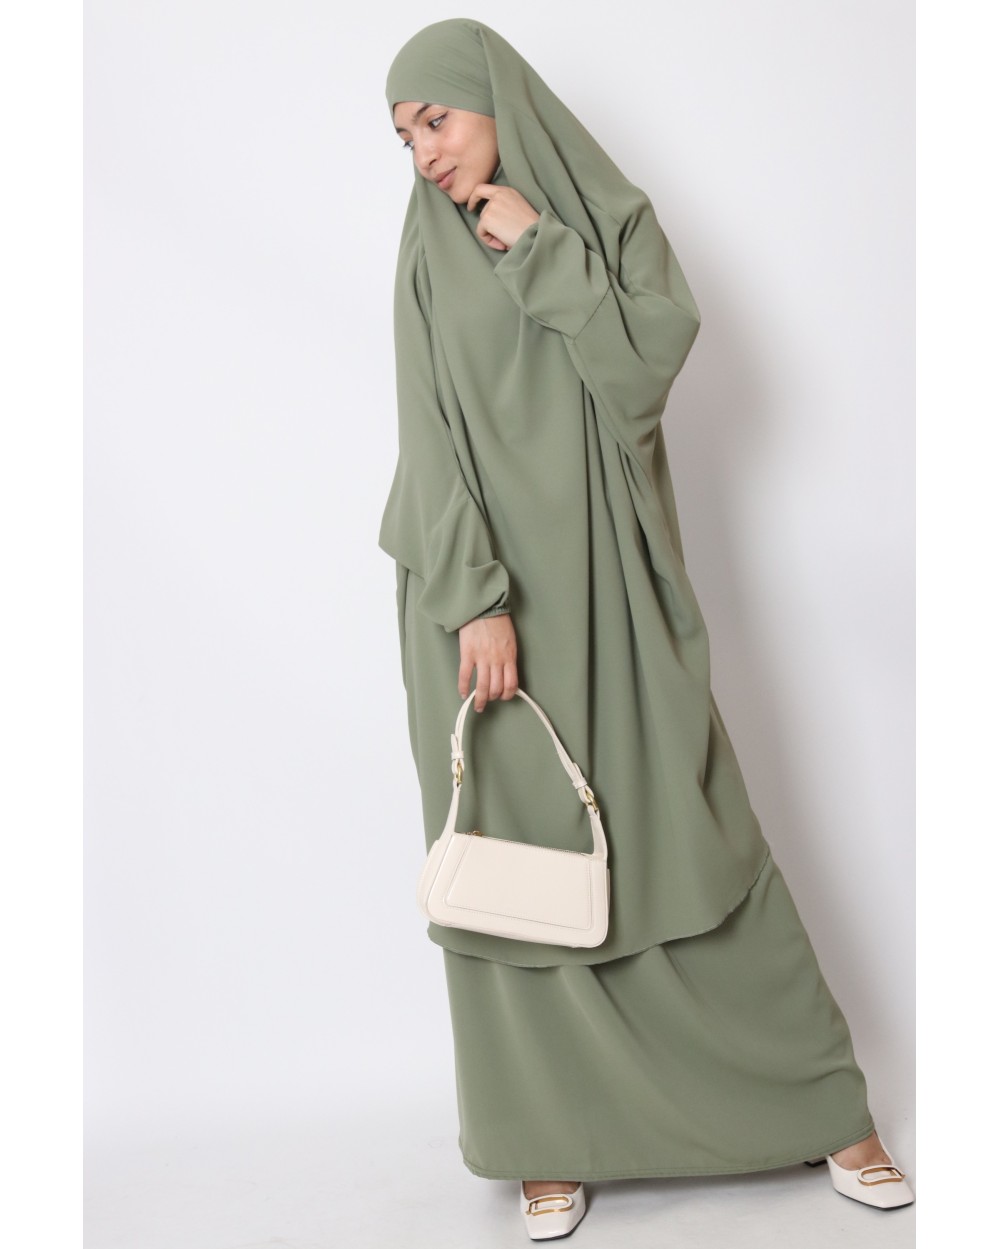 Jilbab jupe soie de médine